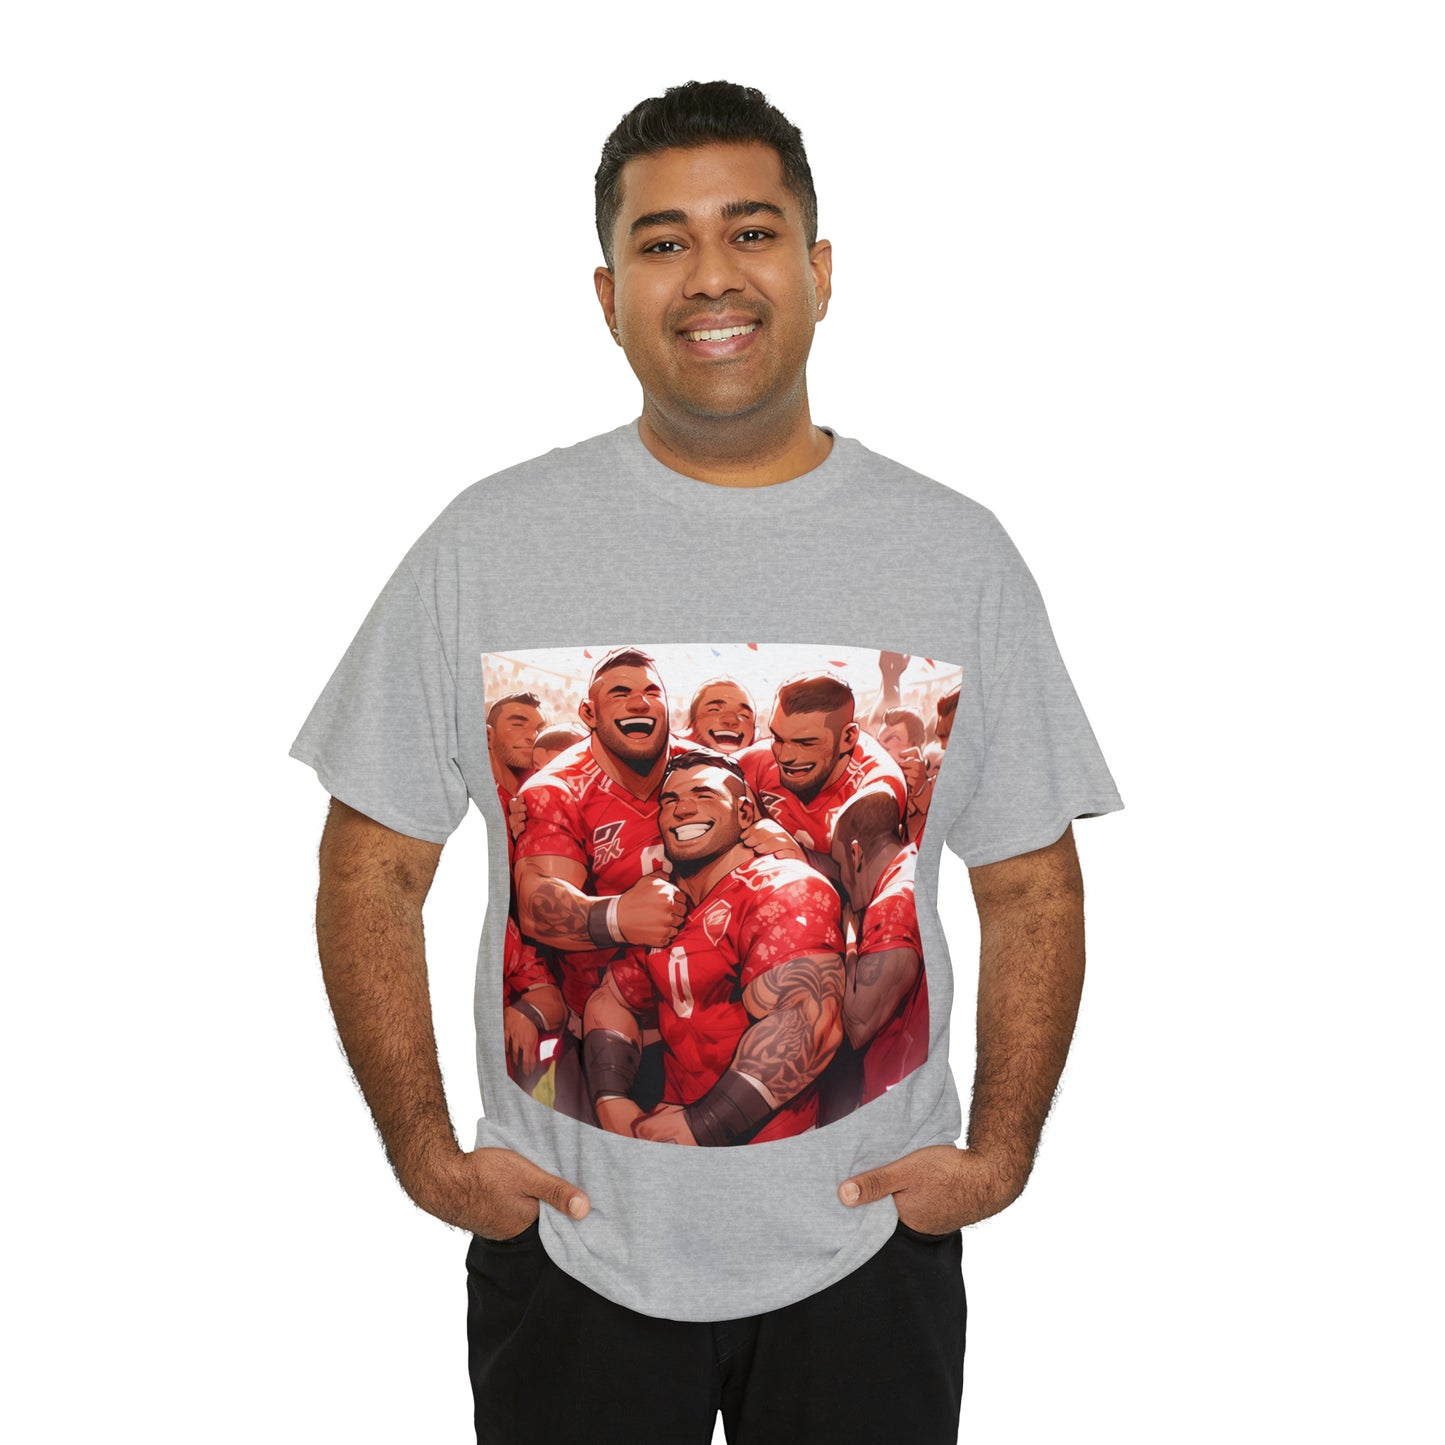 Happy Tonga - light shirts